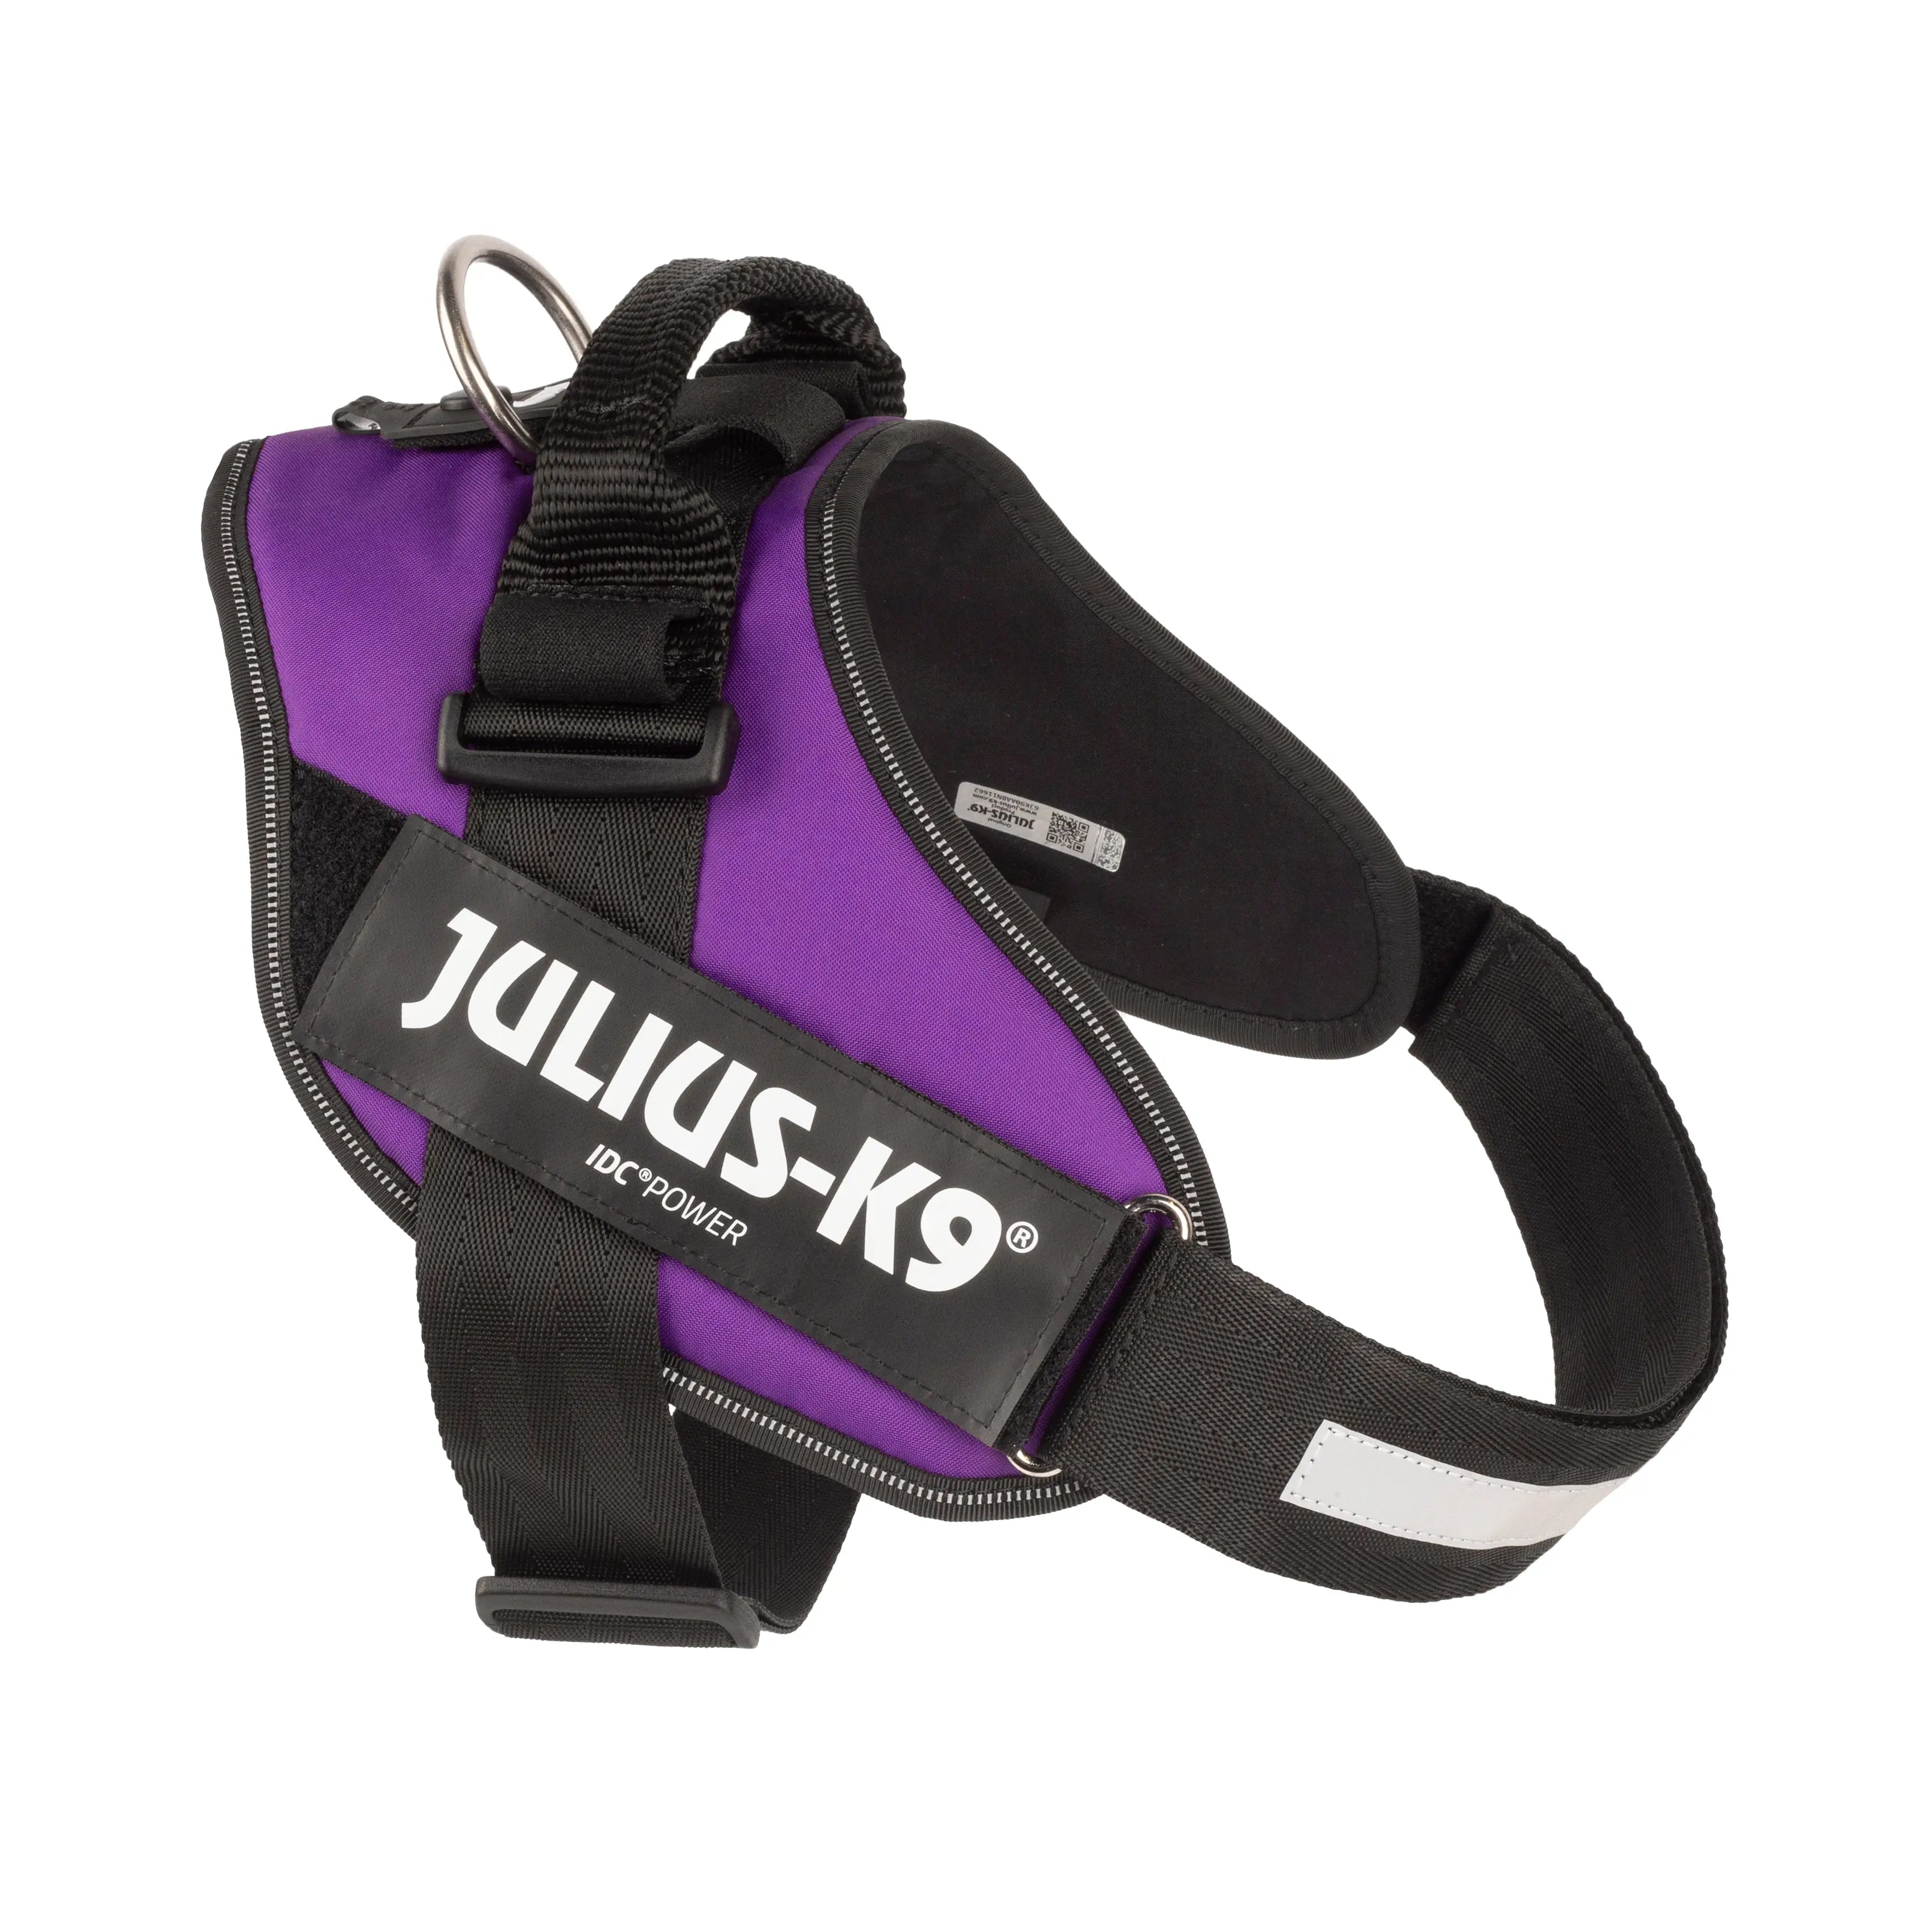 Julius-K9 IDC Powerharness, Size: XL/2, Dark Purple